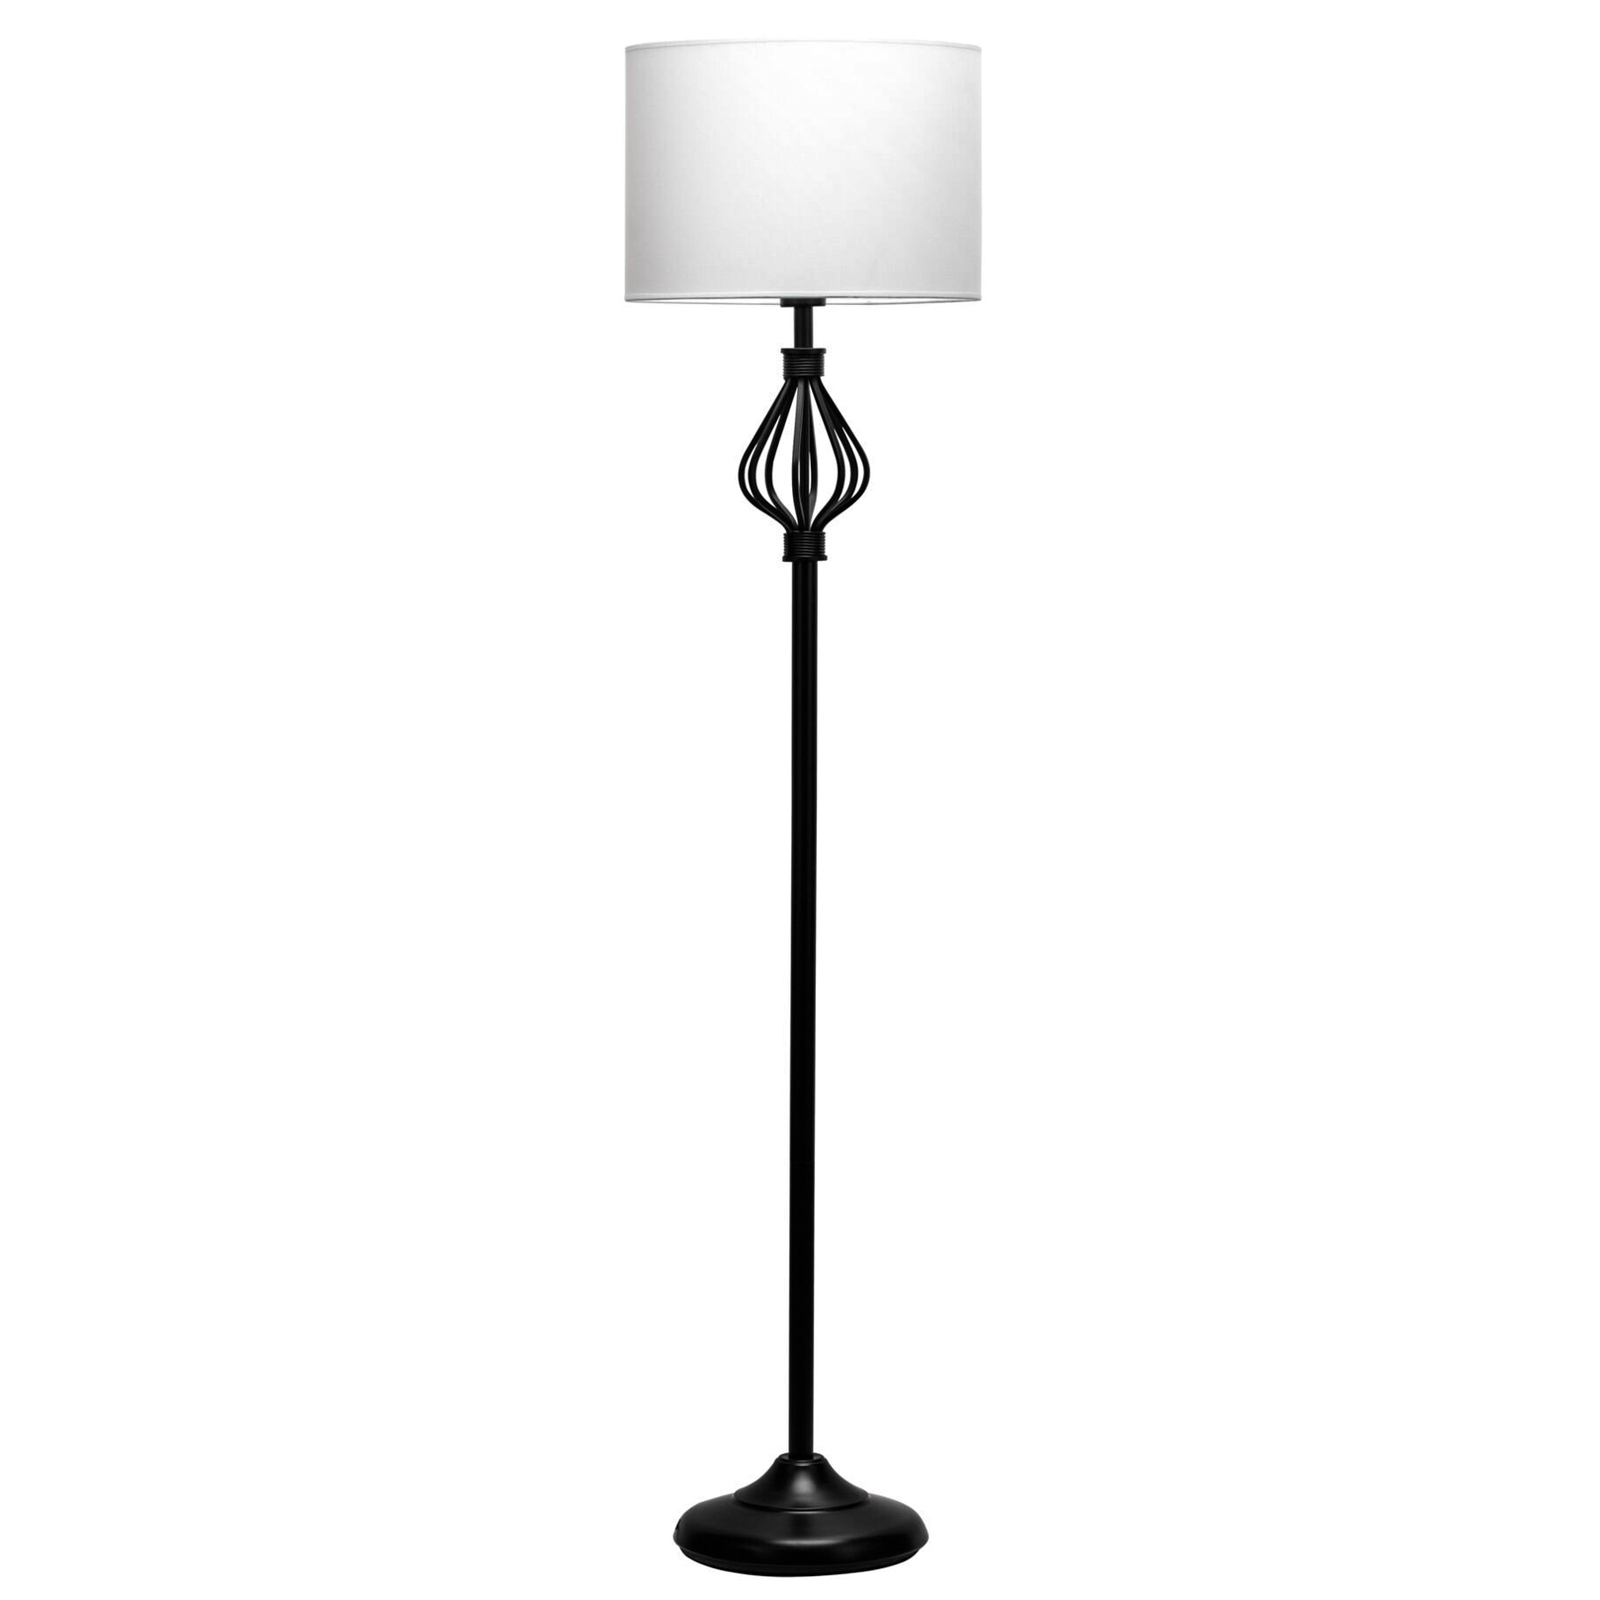 Pauleen Grand Beauty floor lamp in classic design